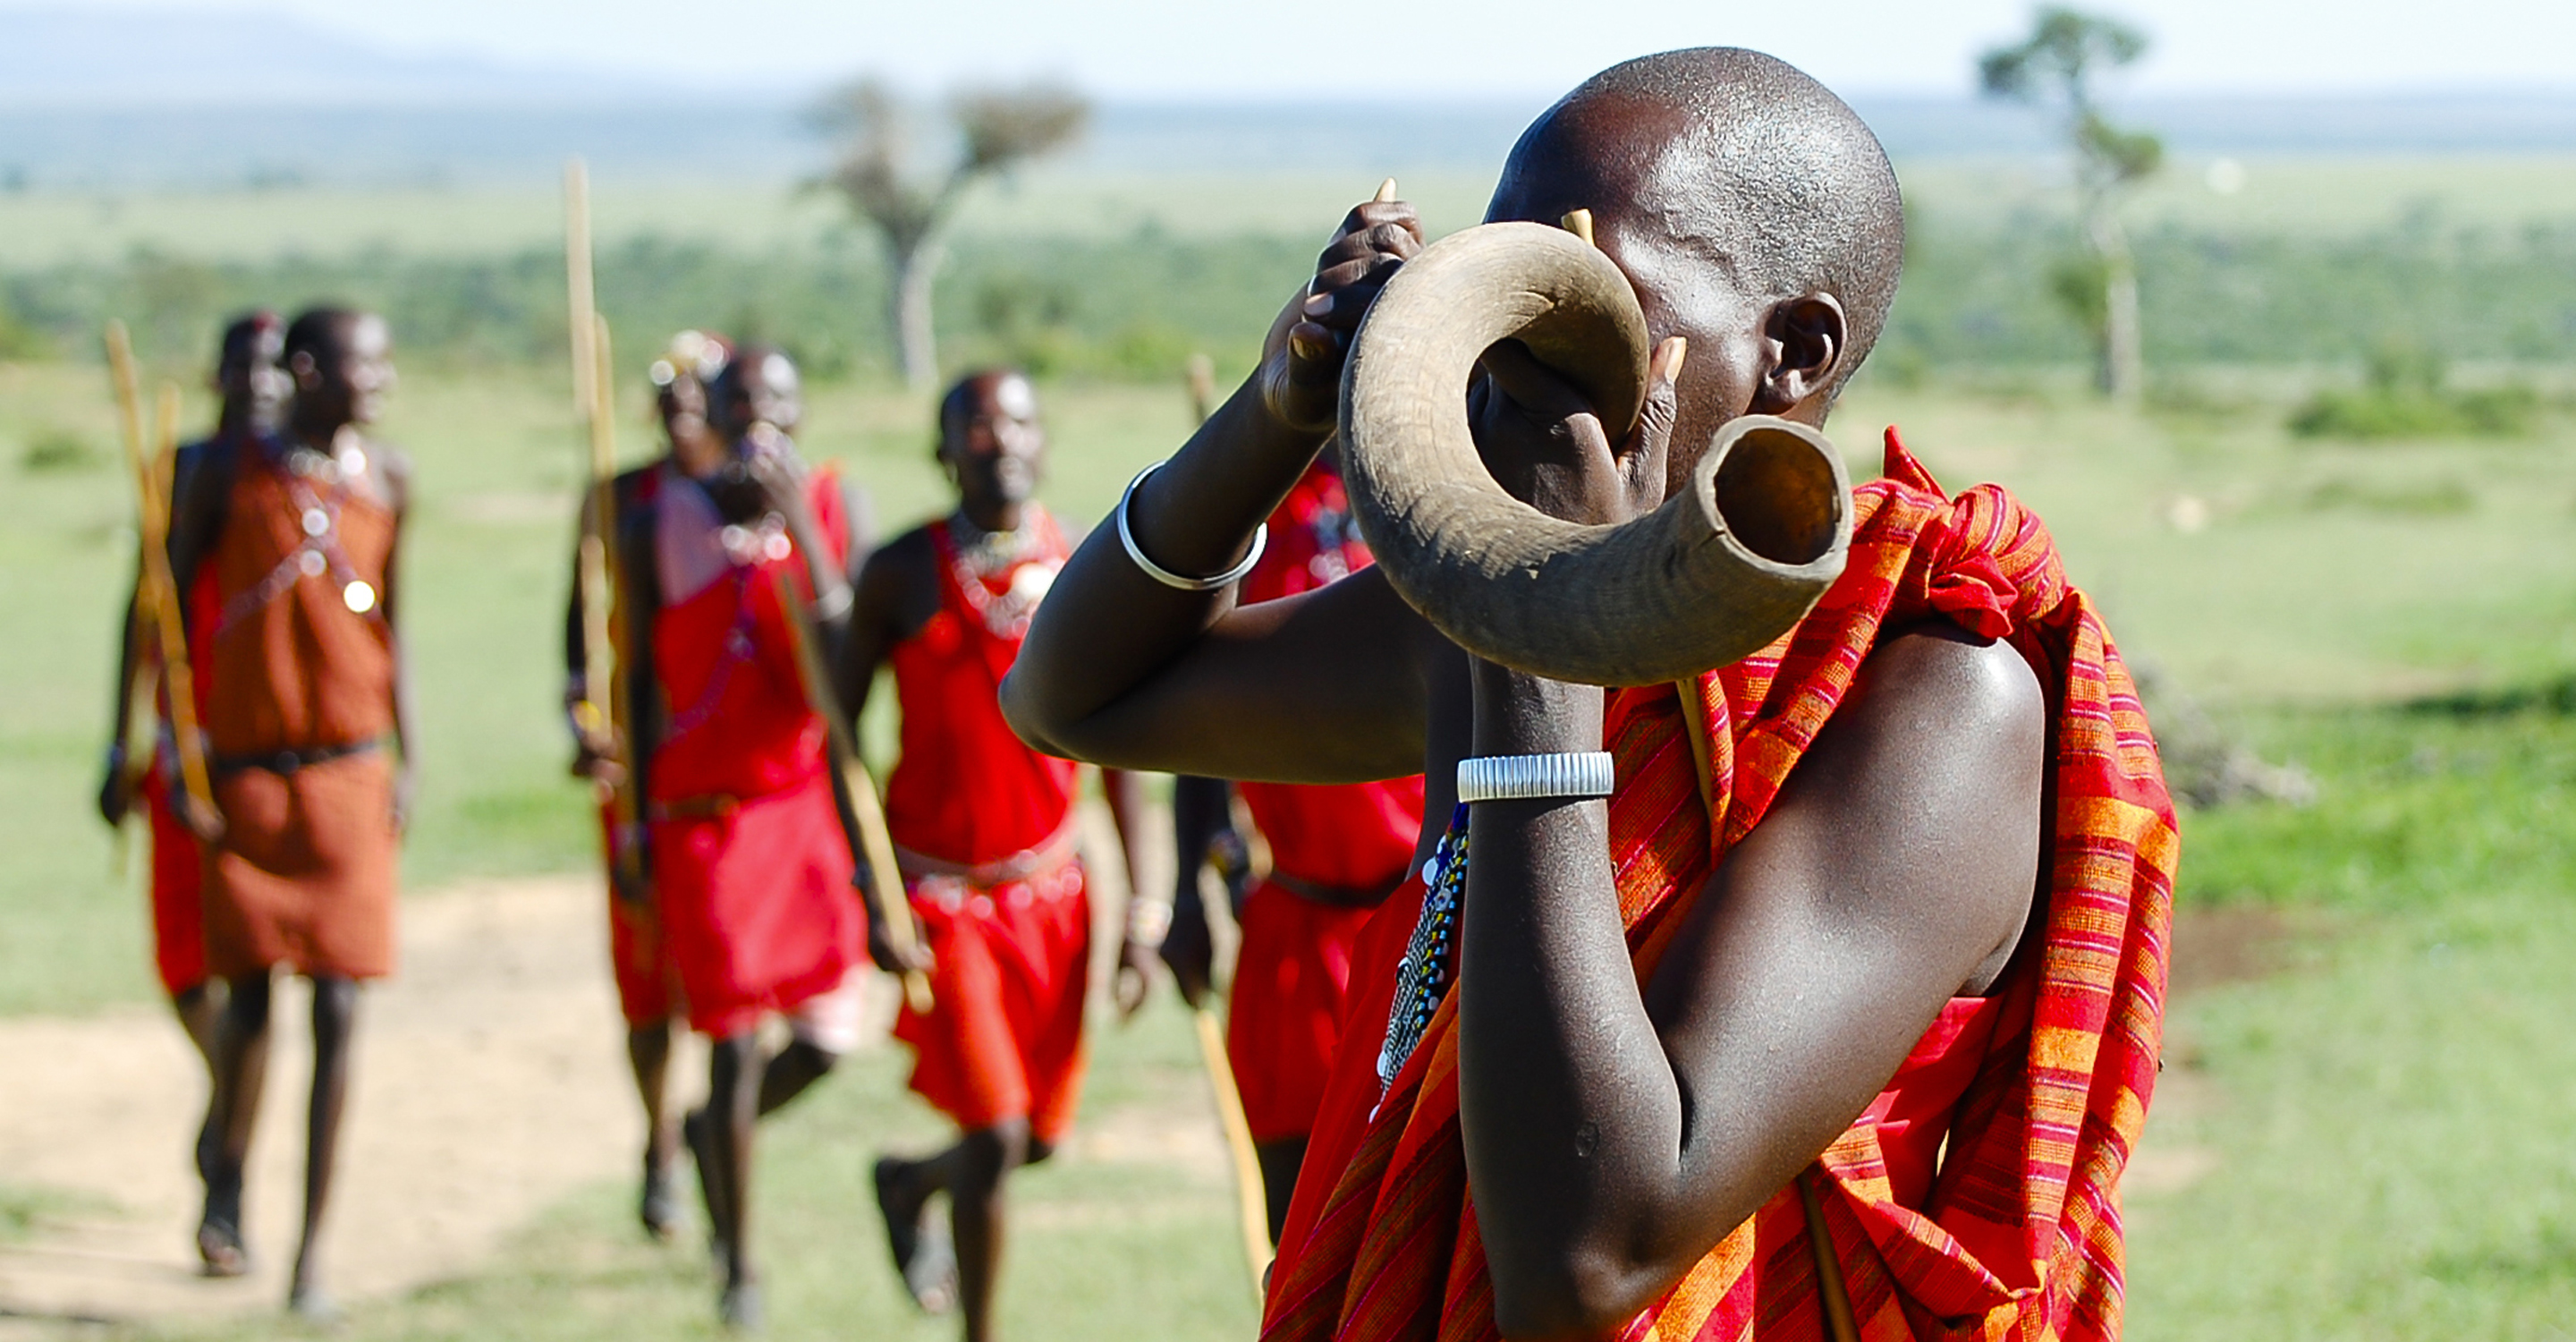 A Maasai warrior blows into a traditional horn during a demonstration in the Maasai Mara National Reserve, Kenya